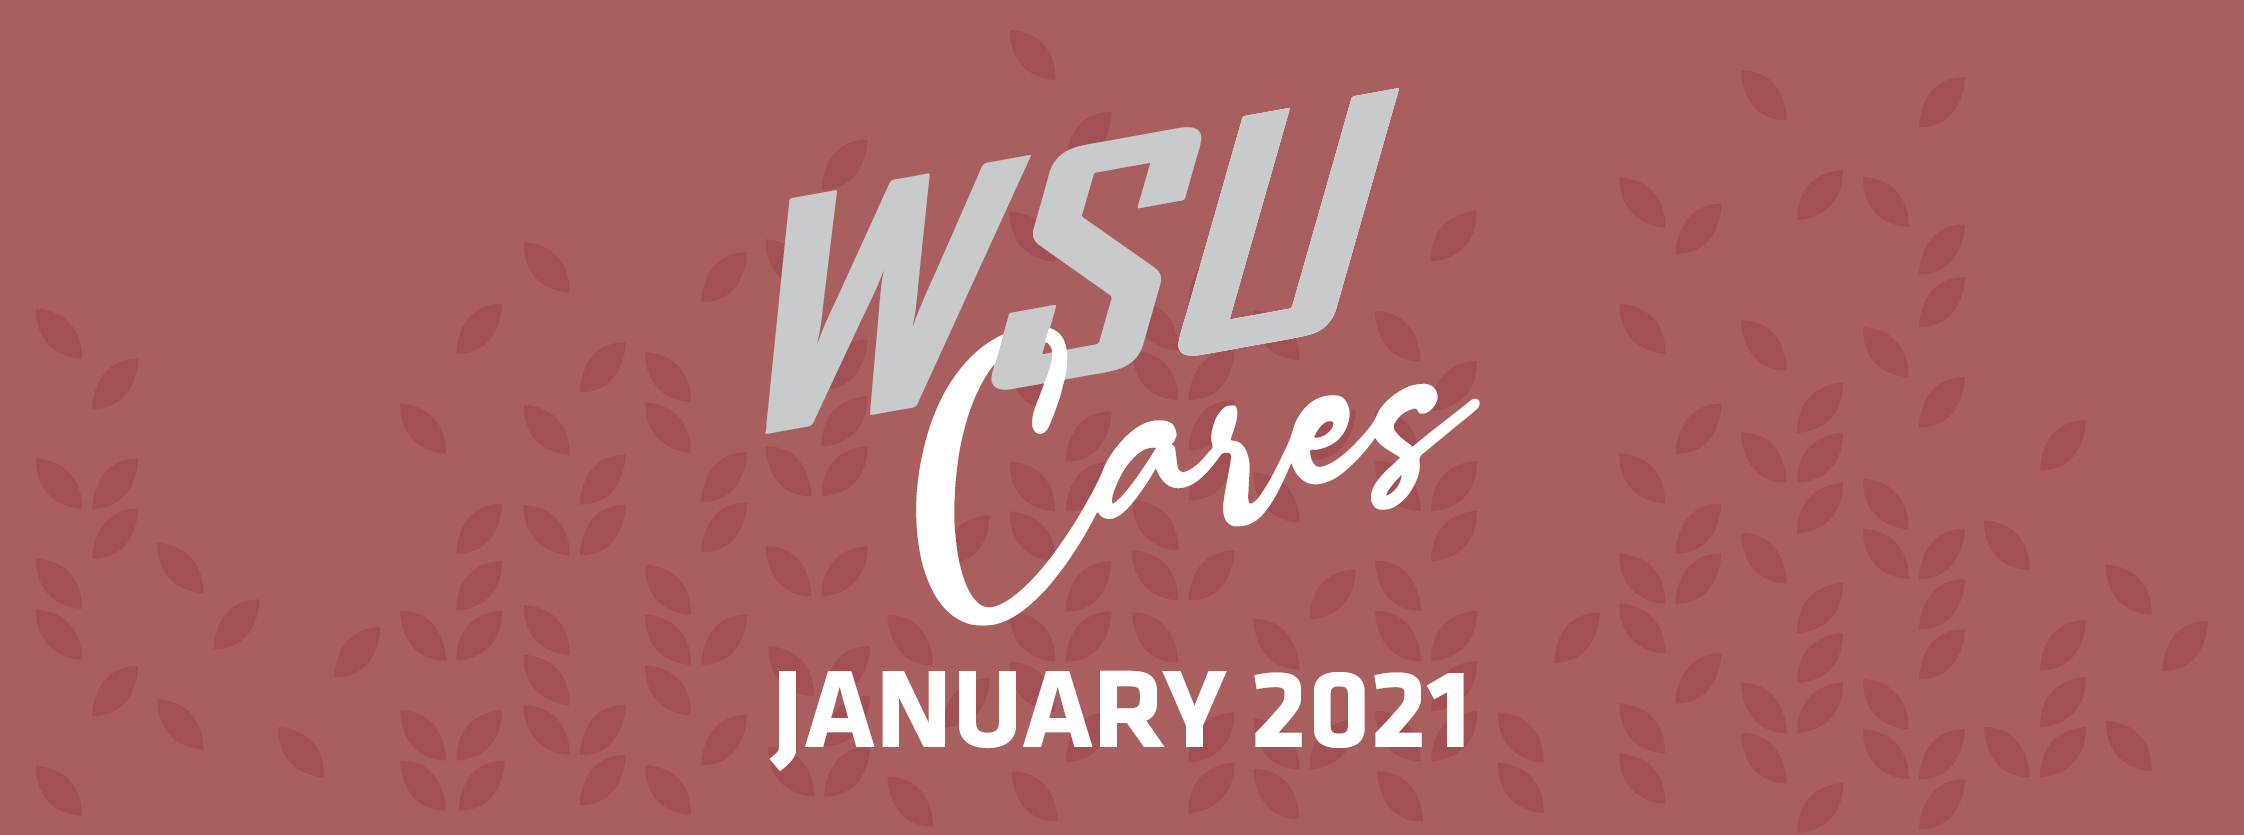 WSU Cares - January 2021